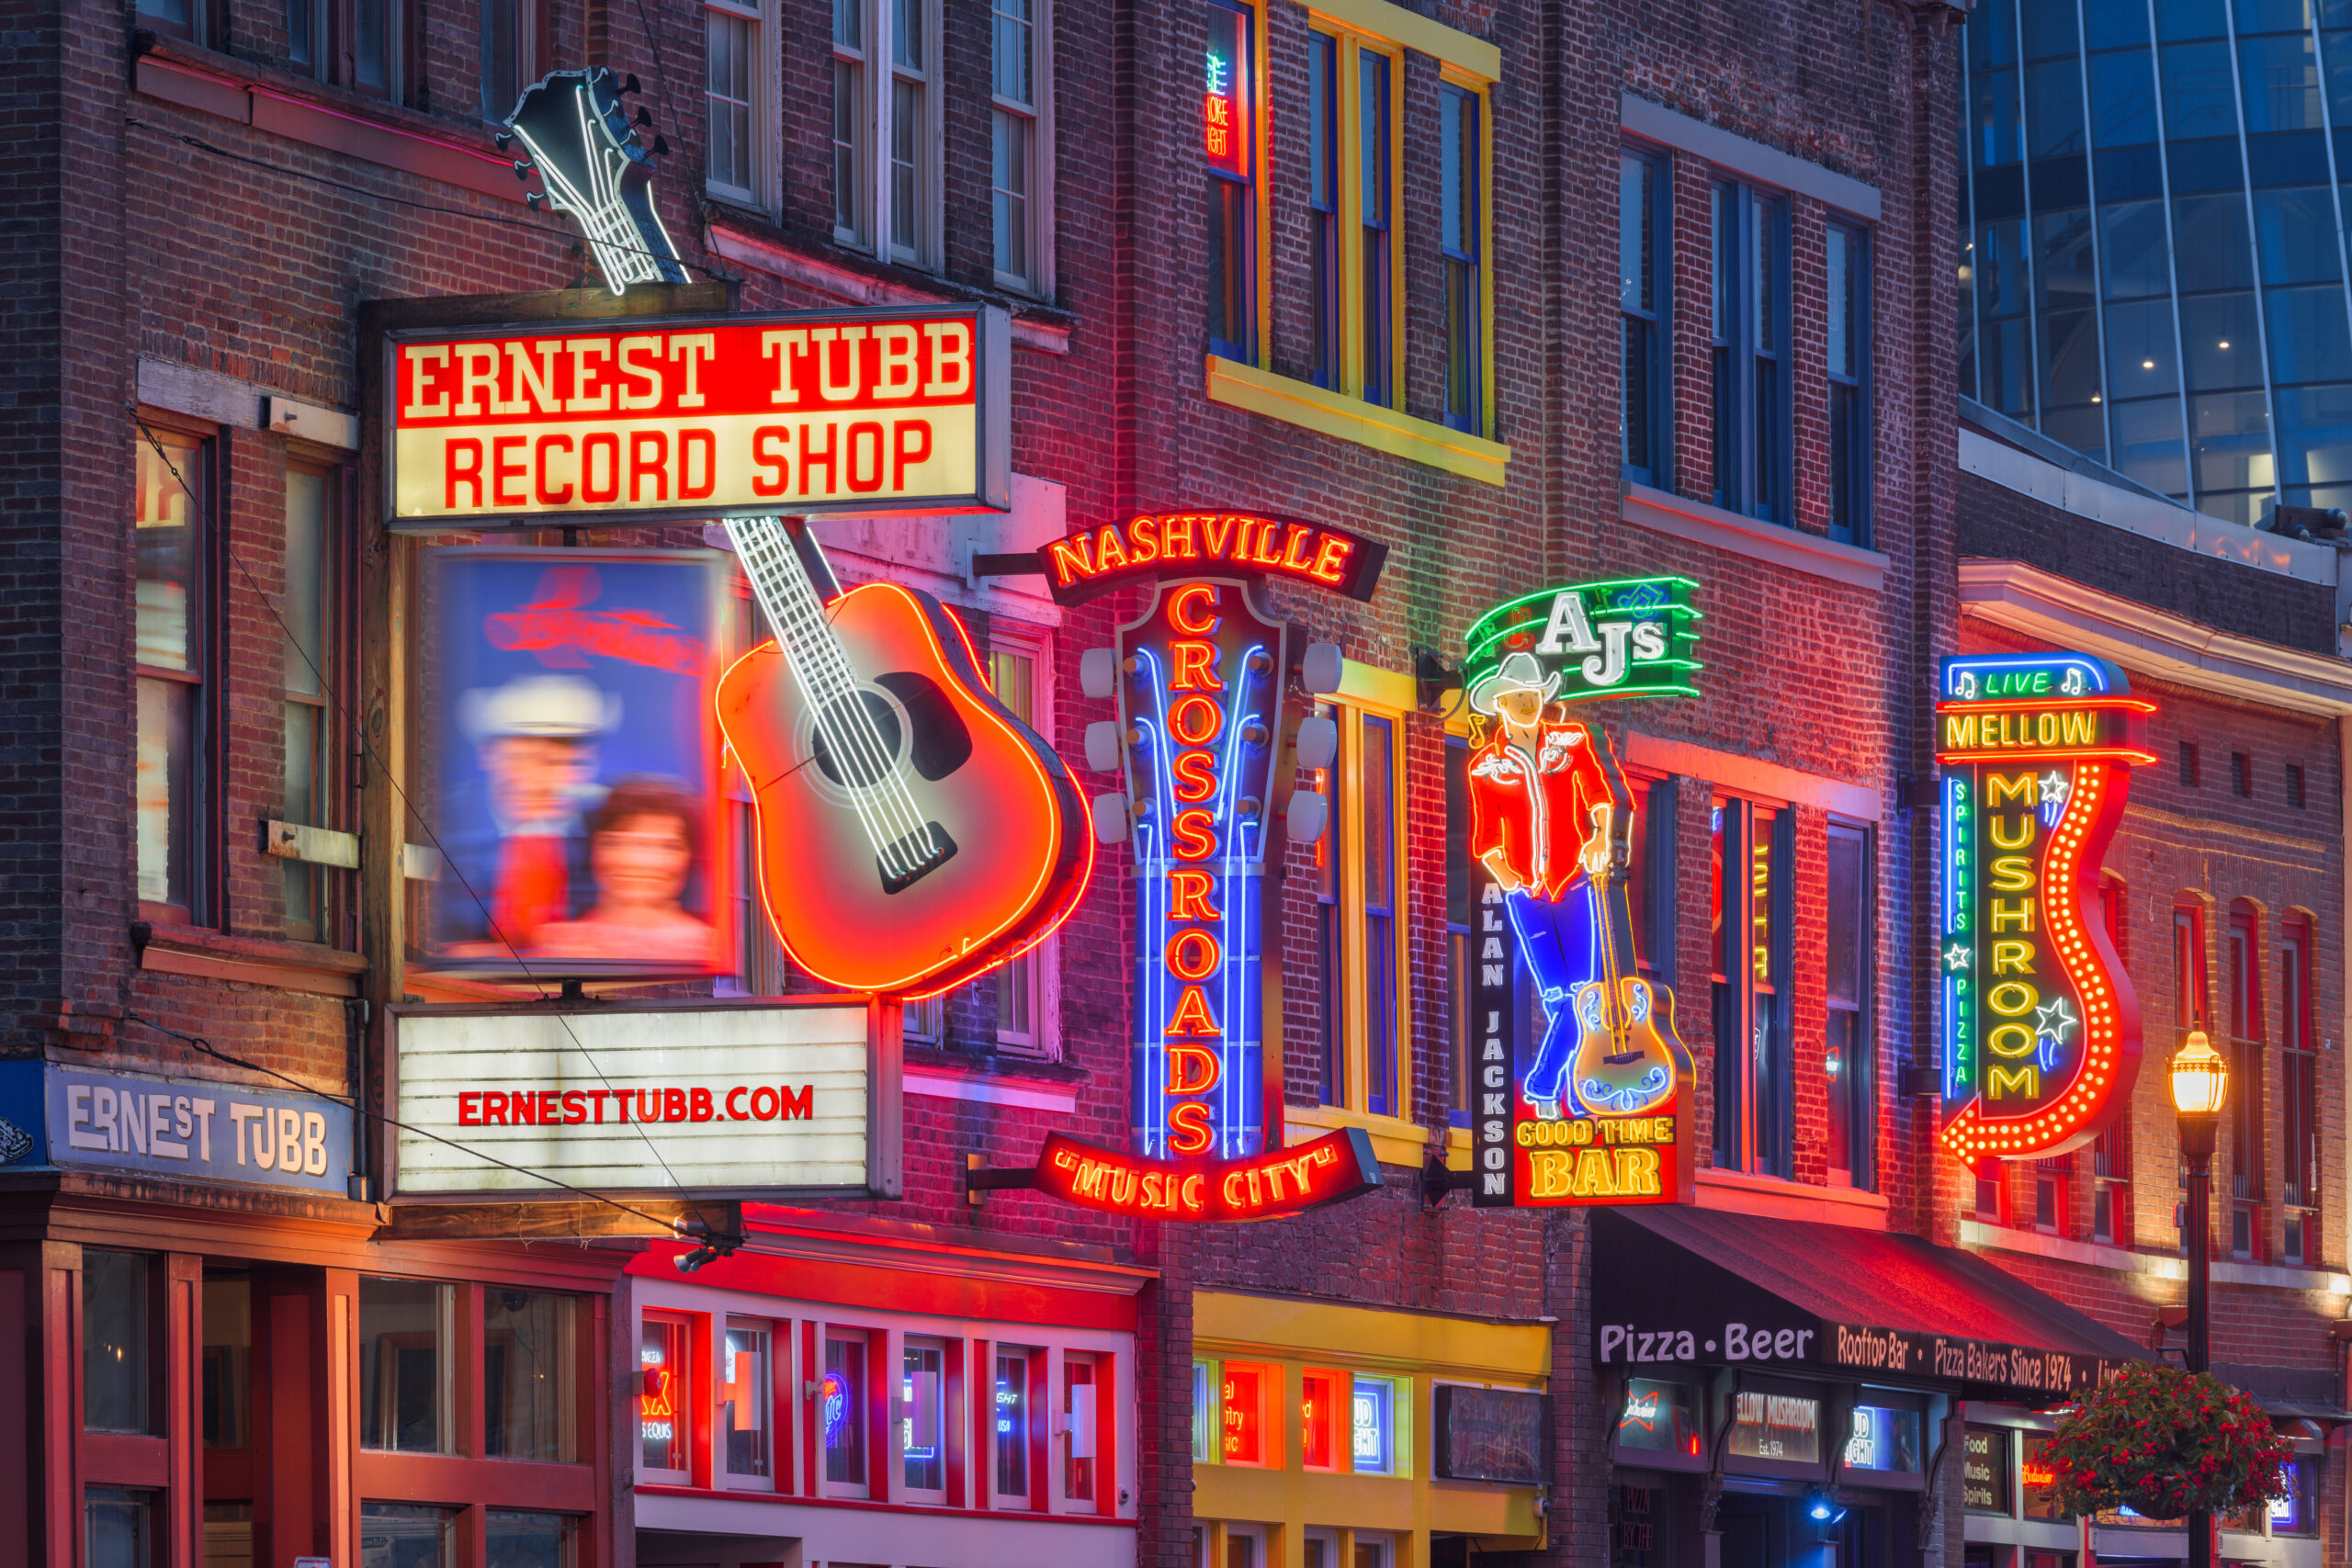 Lower Broadway, Nashville, TN, USA